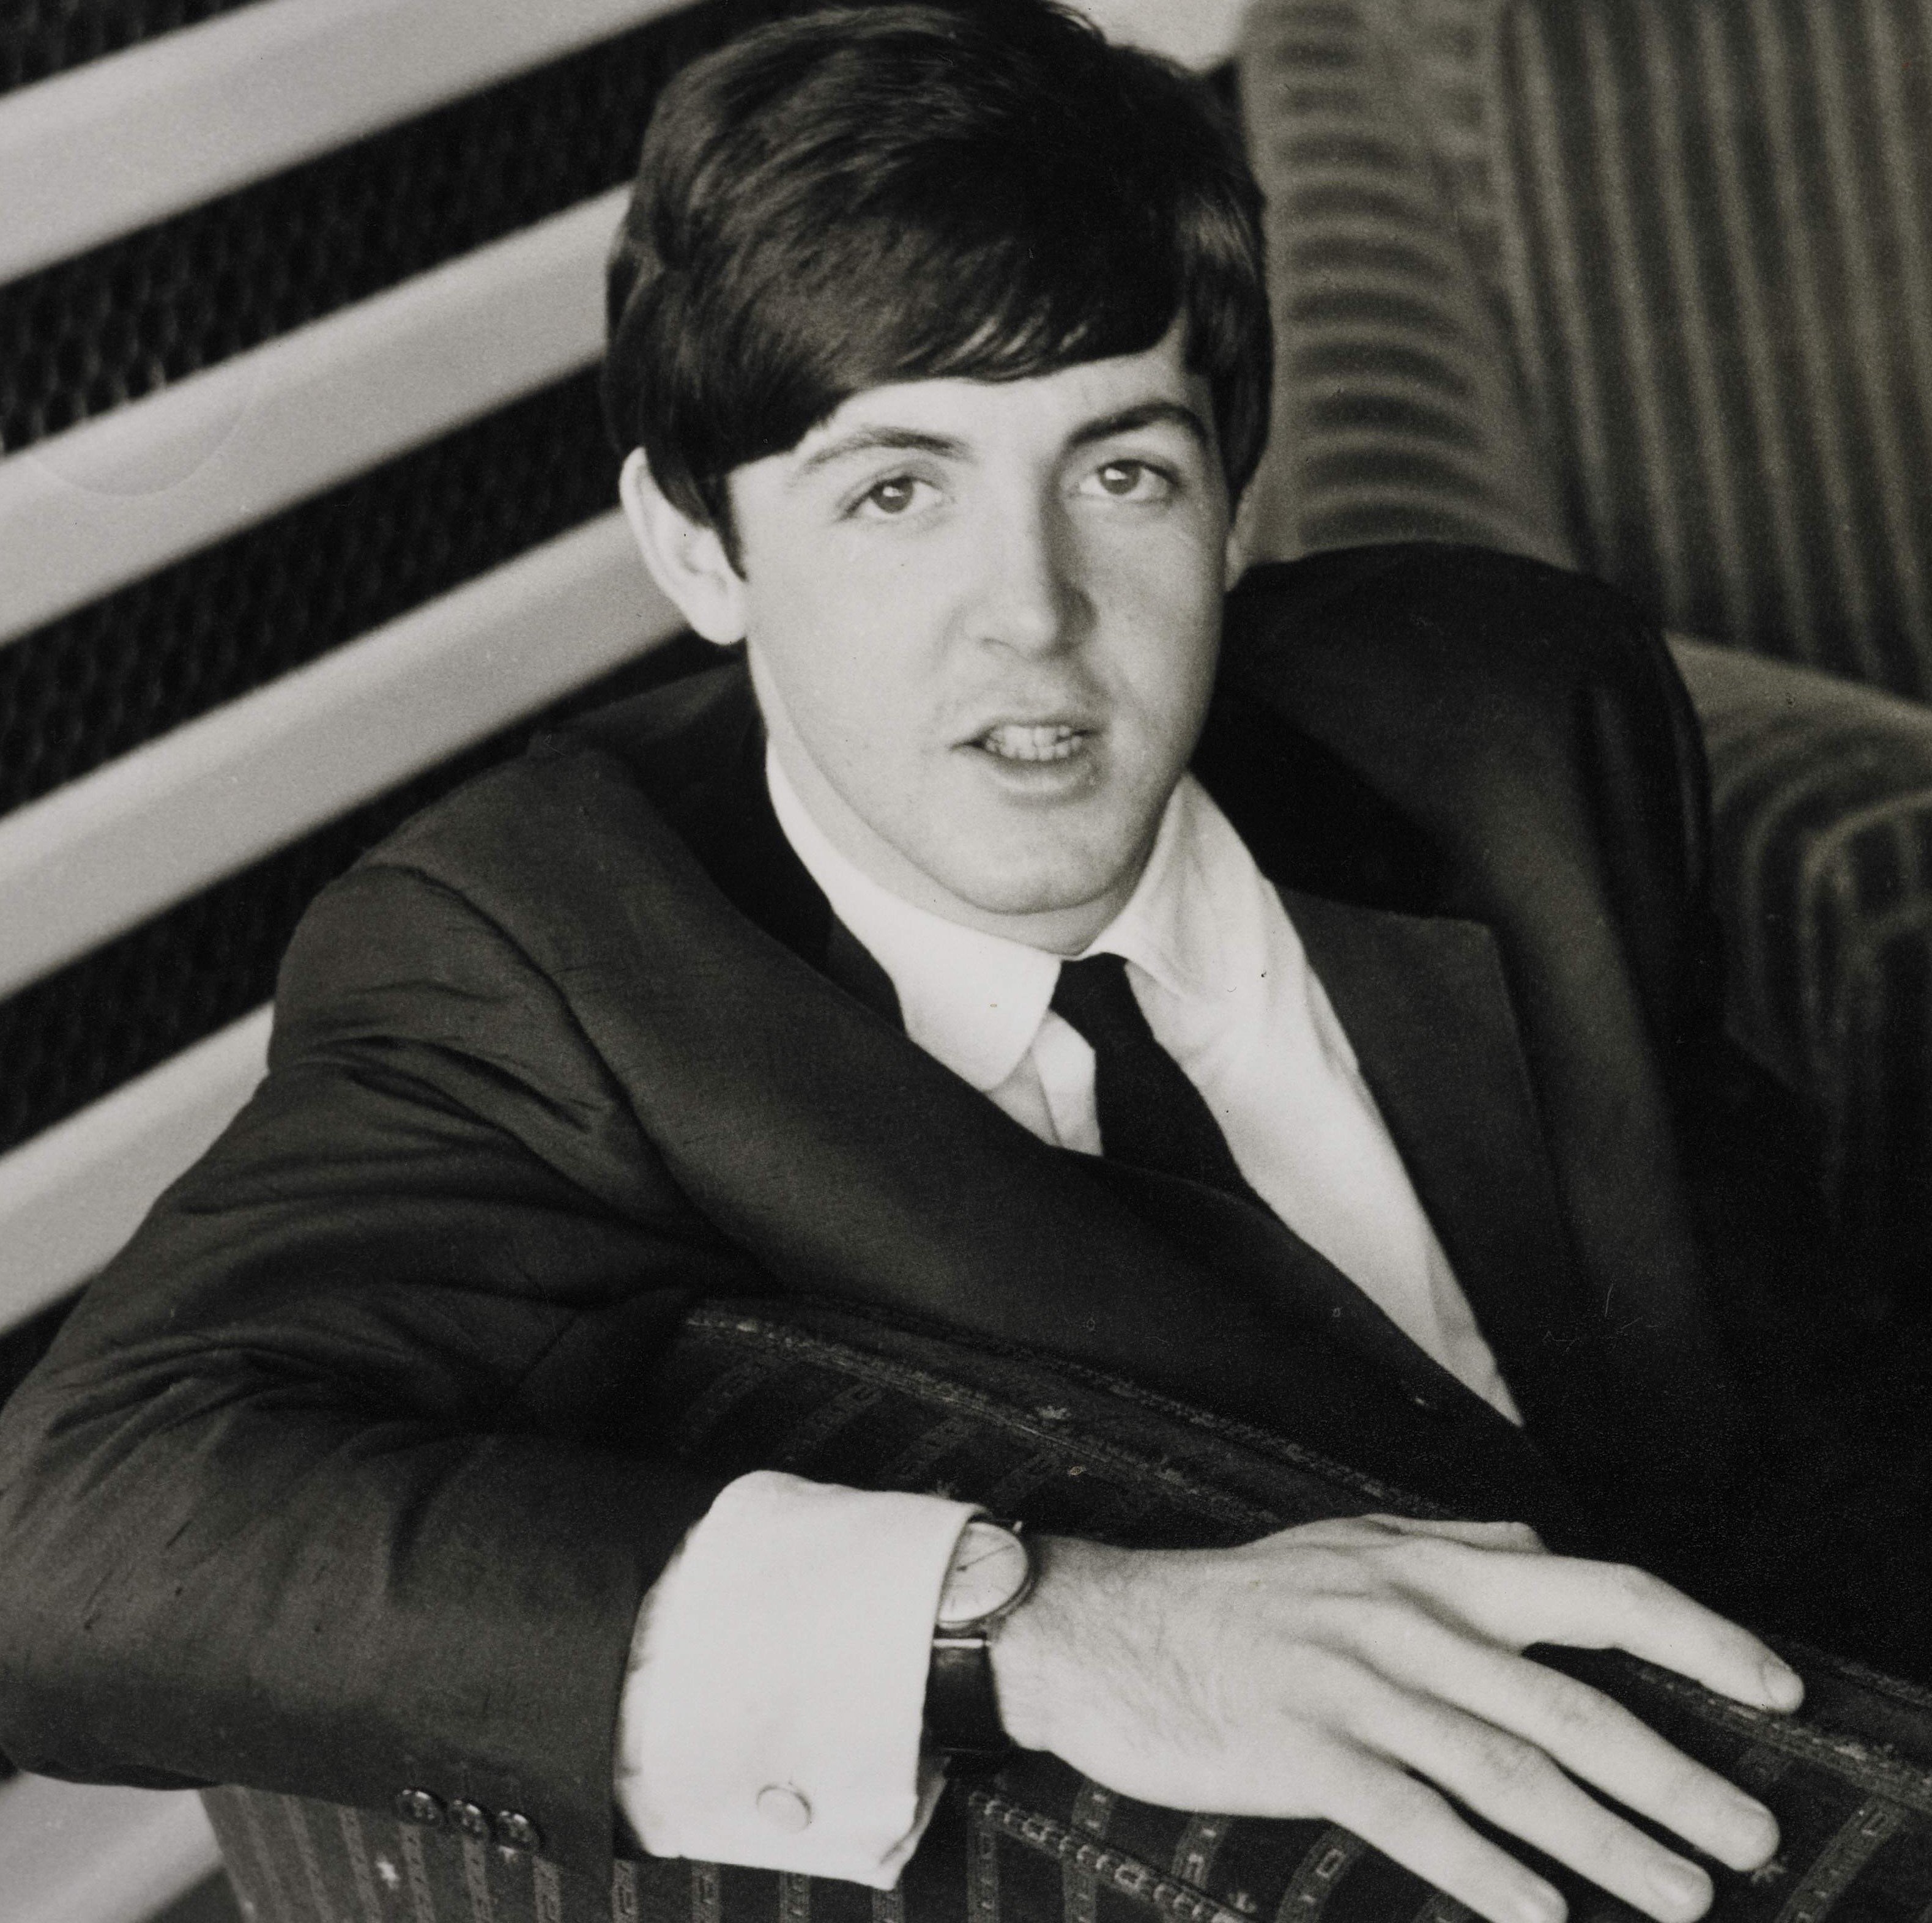 Paul McCartney in a chair